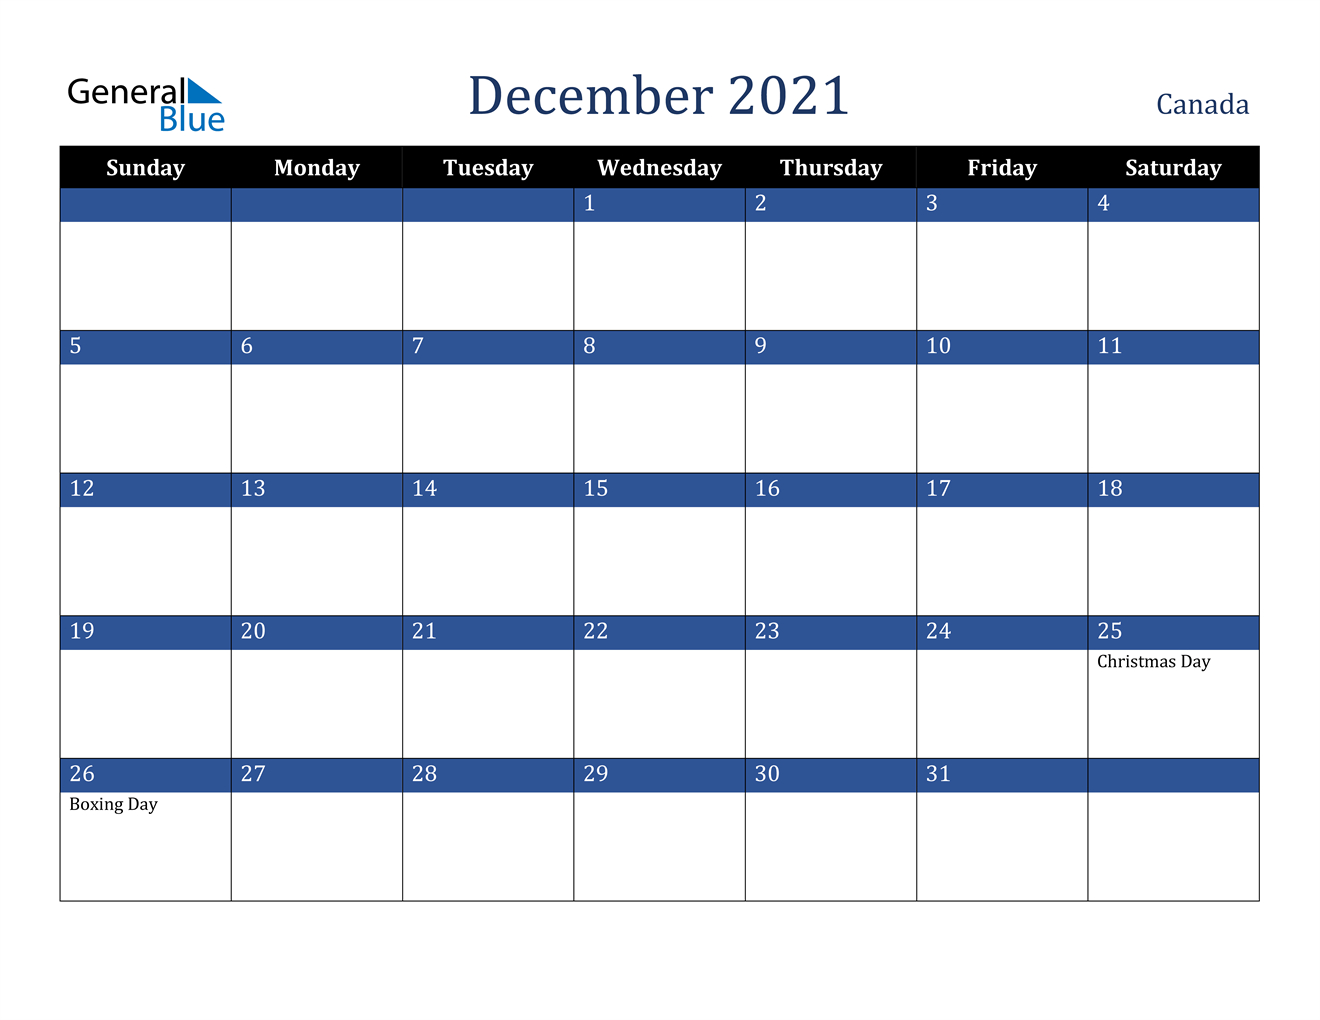 December 2021 Calendar - Canada